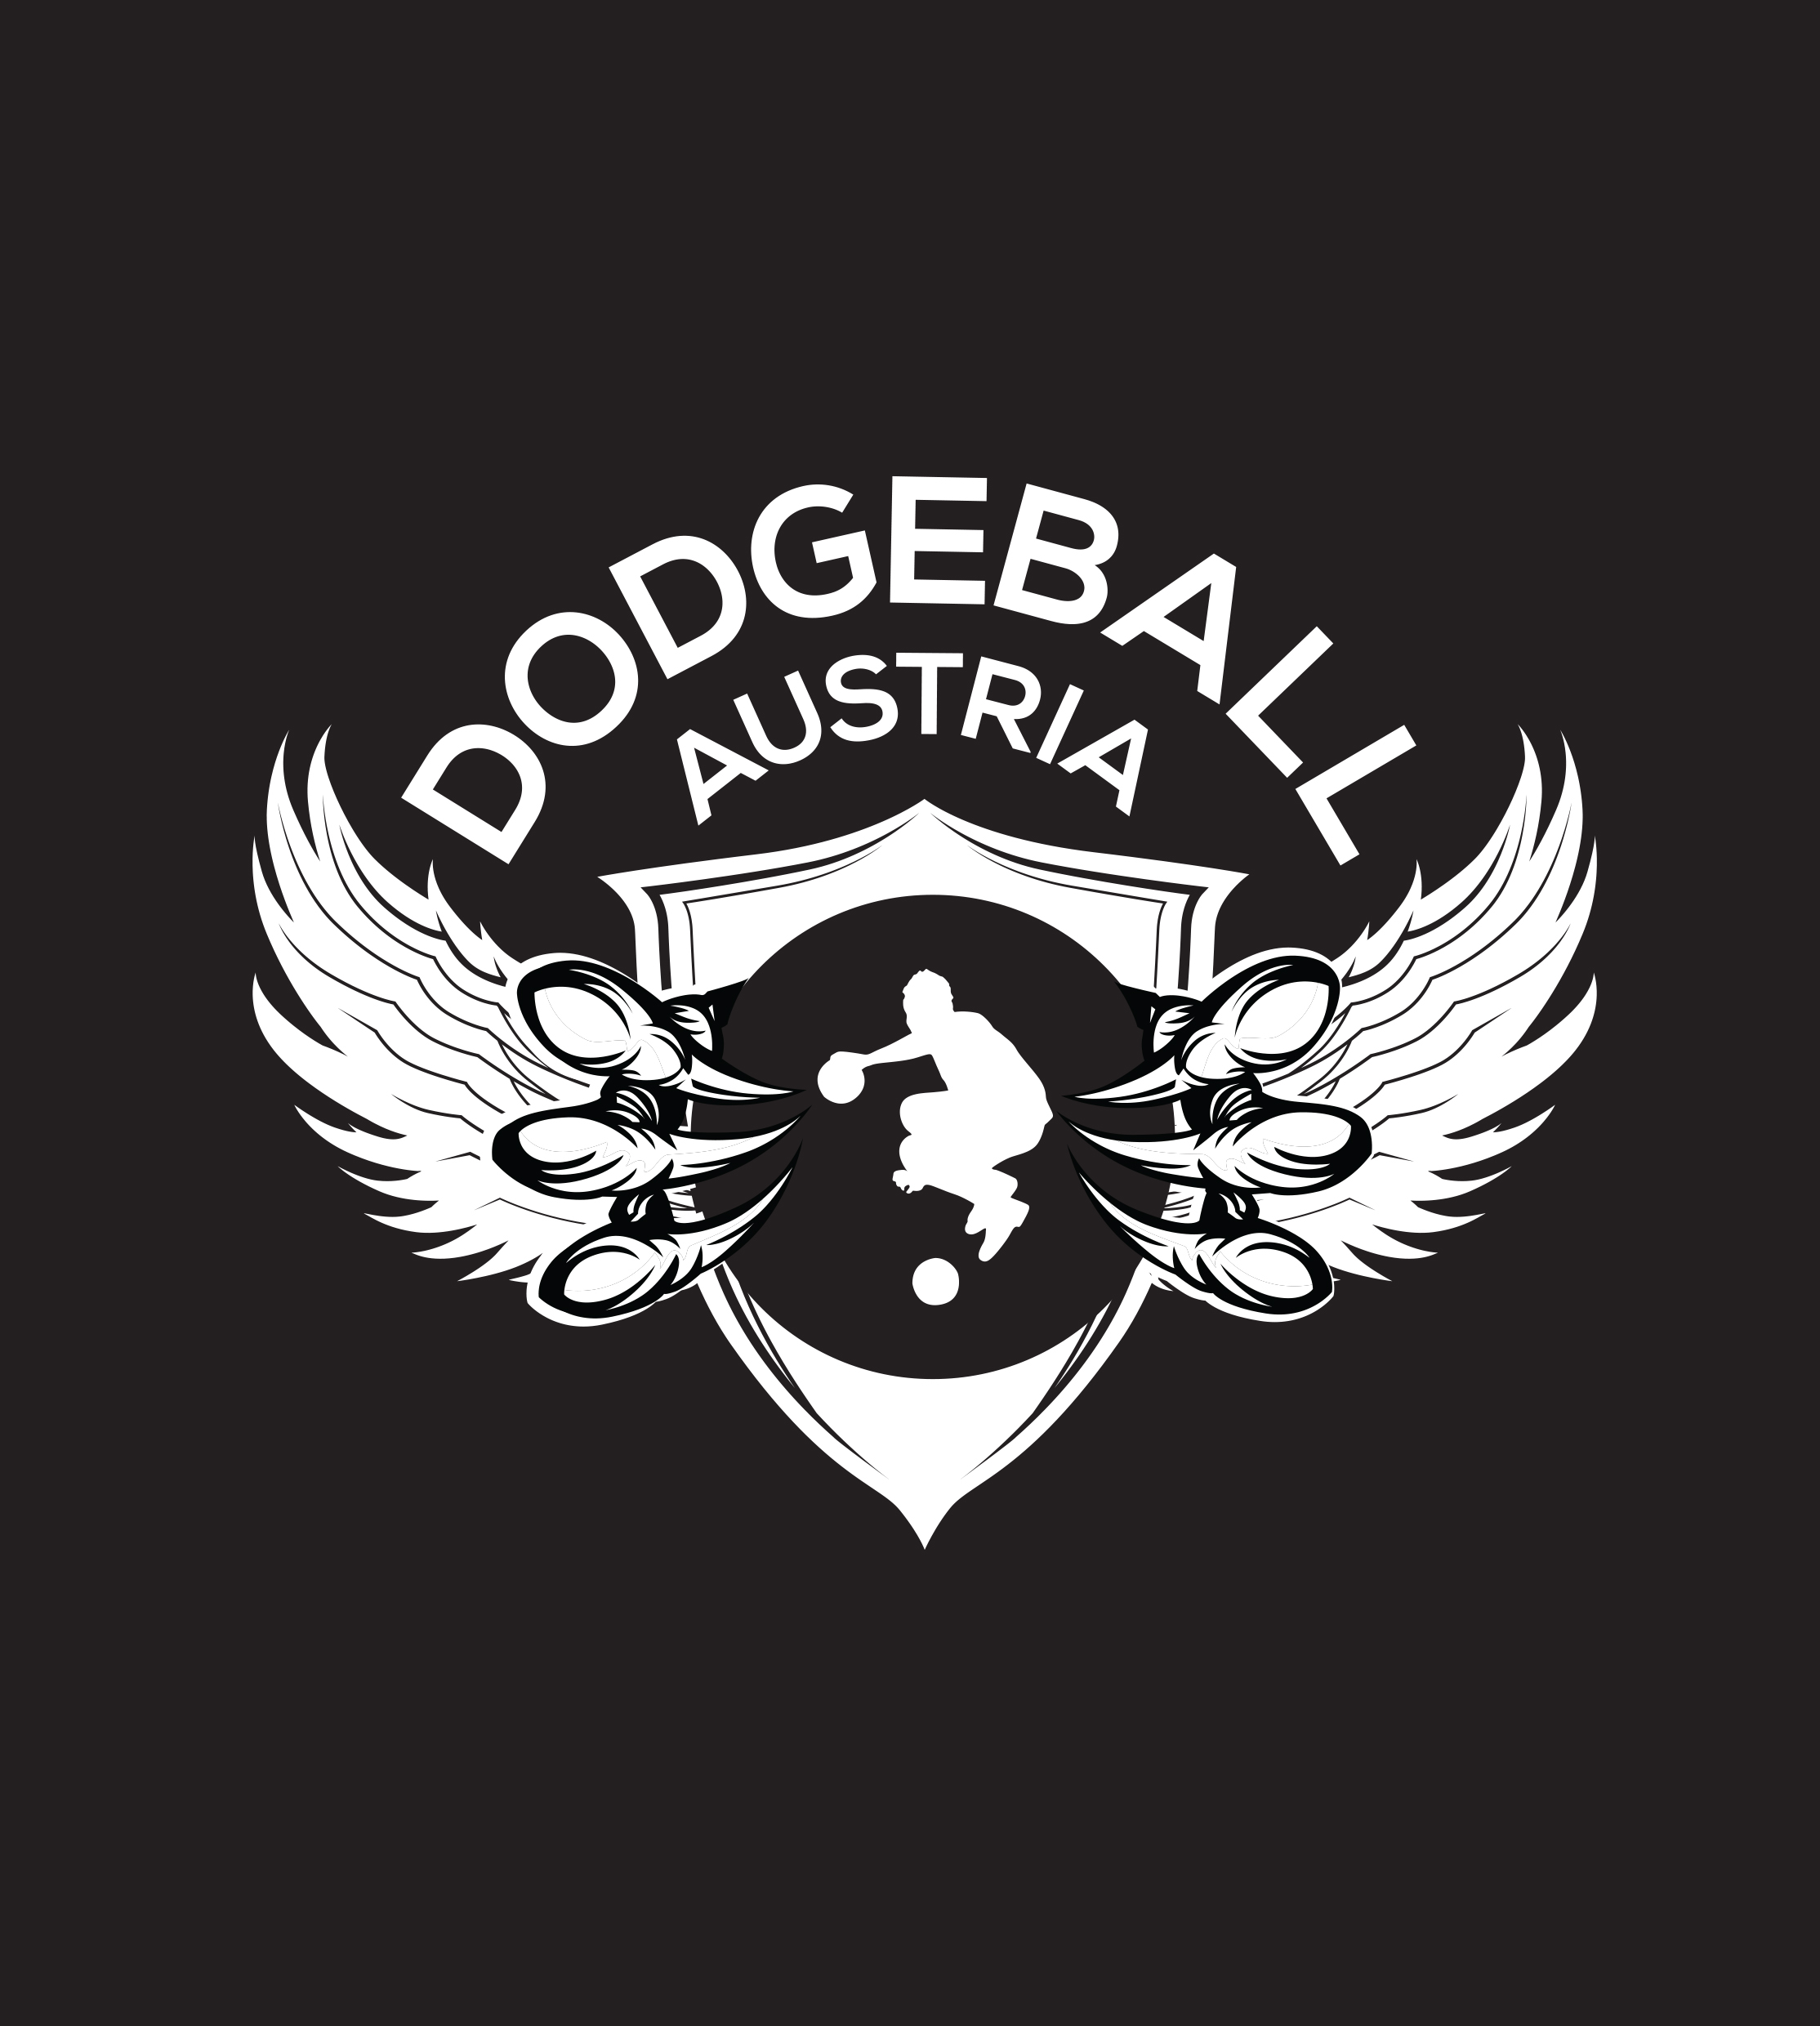 (c) Dodgeball.at